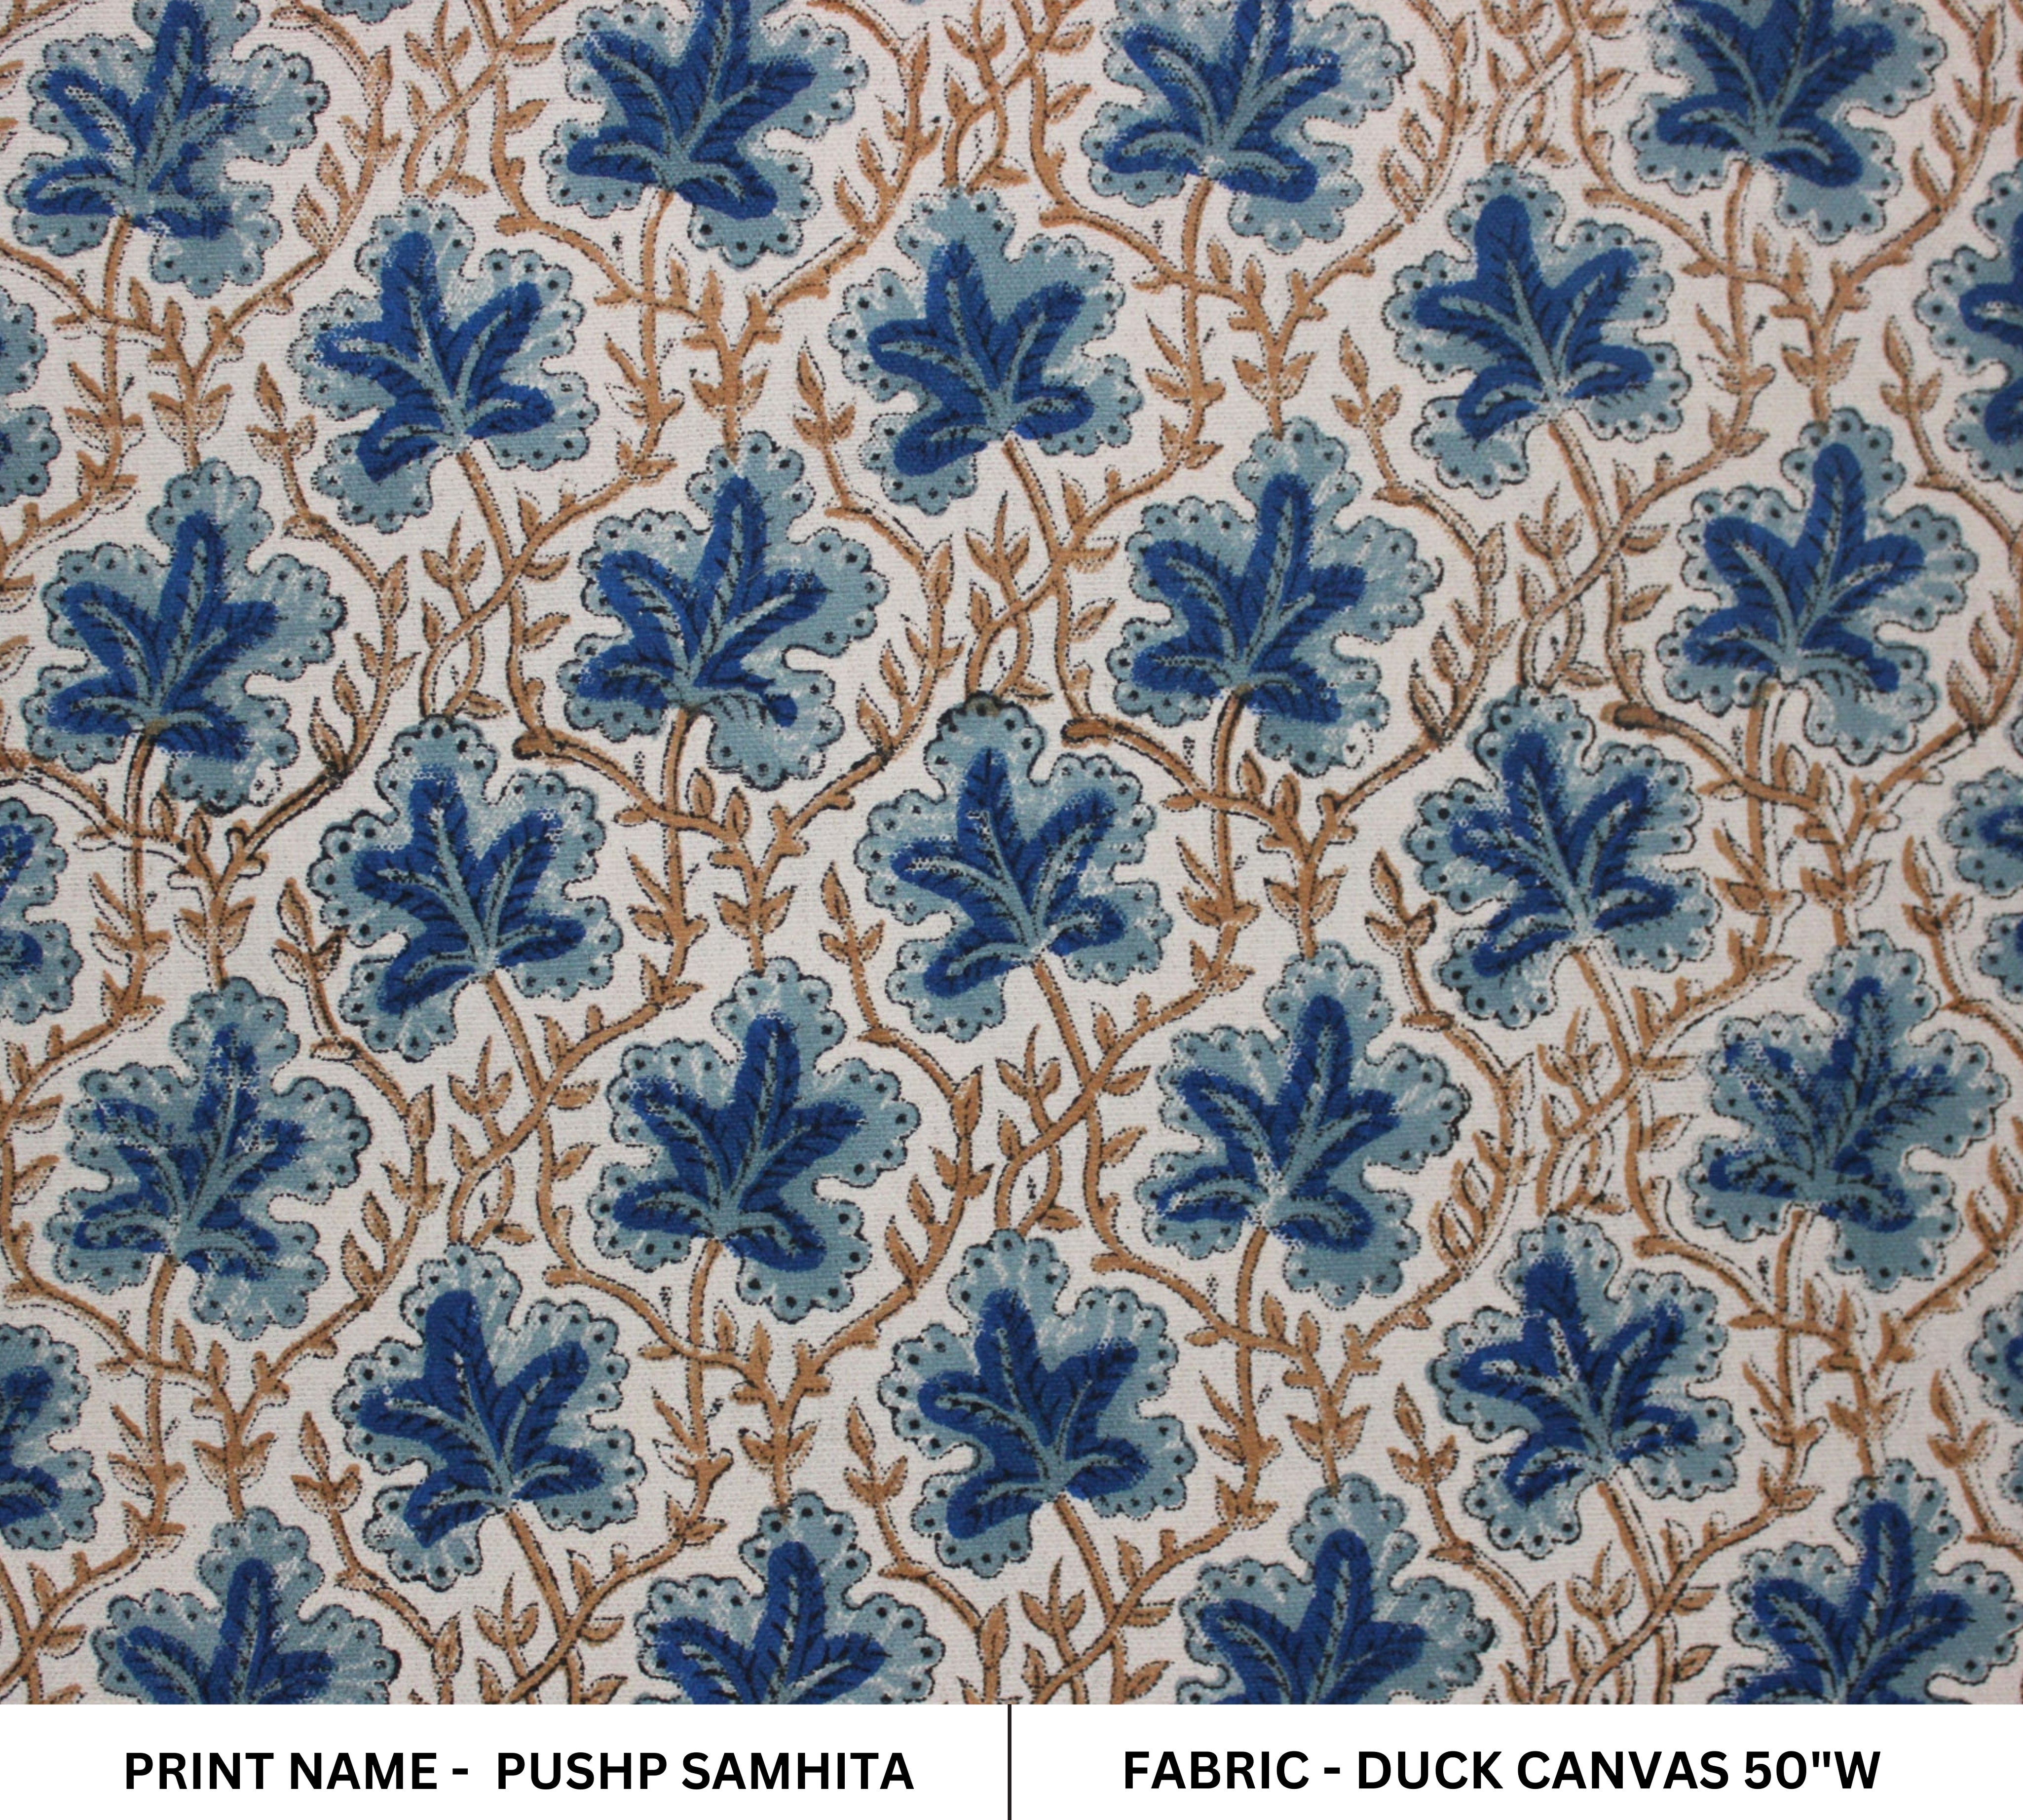 Block Print Linen Fabric, Pushp Samhita  Indian Hand Block Print Fabric, Floral Print Fabric By The Yard, Fabric For Farmhouse Pillow Covers, Designer Uphostery